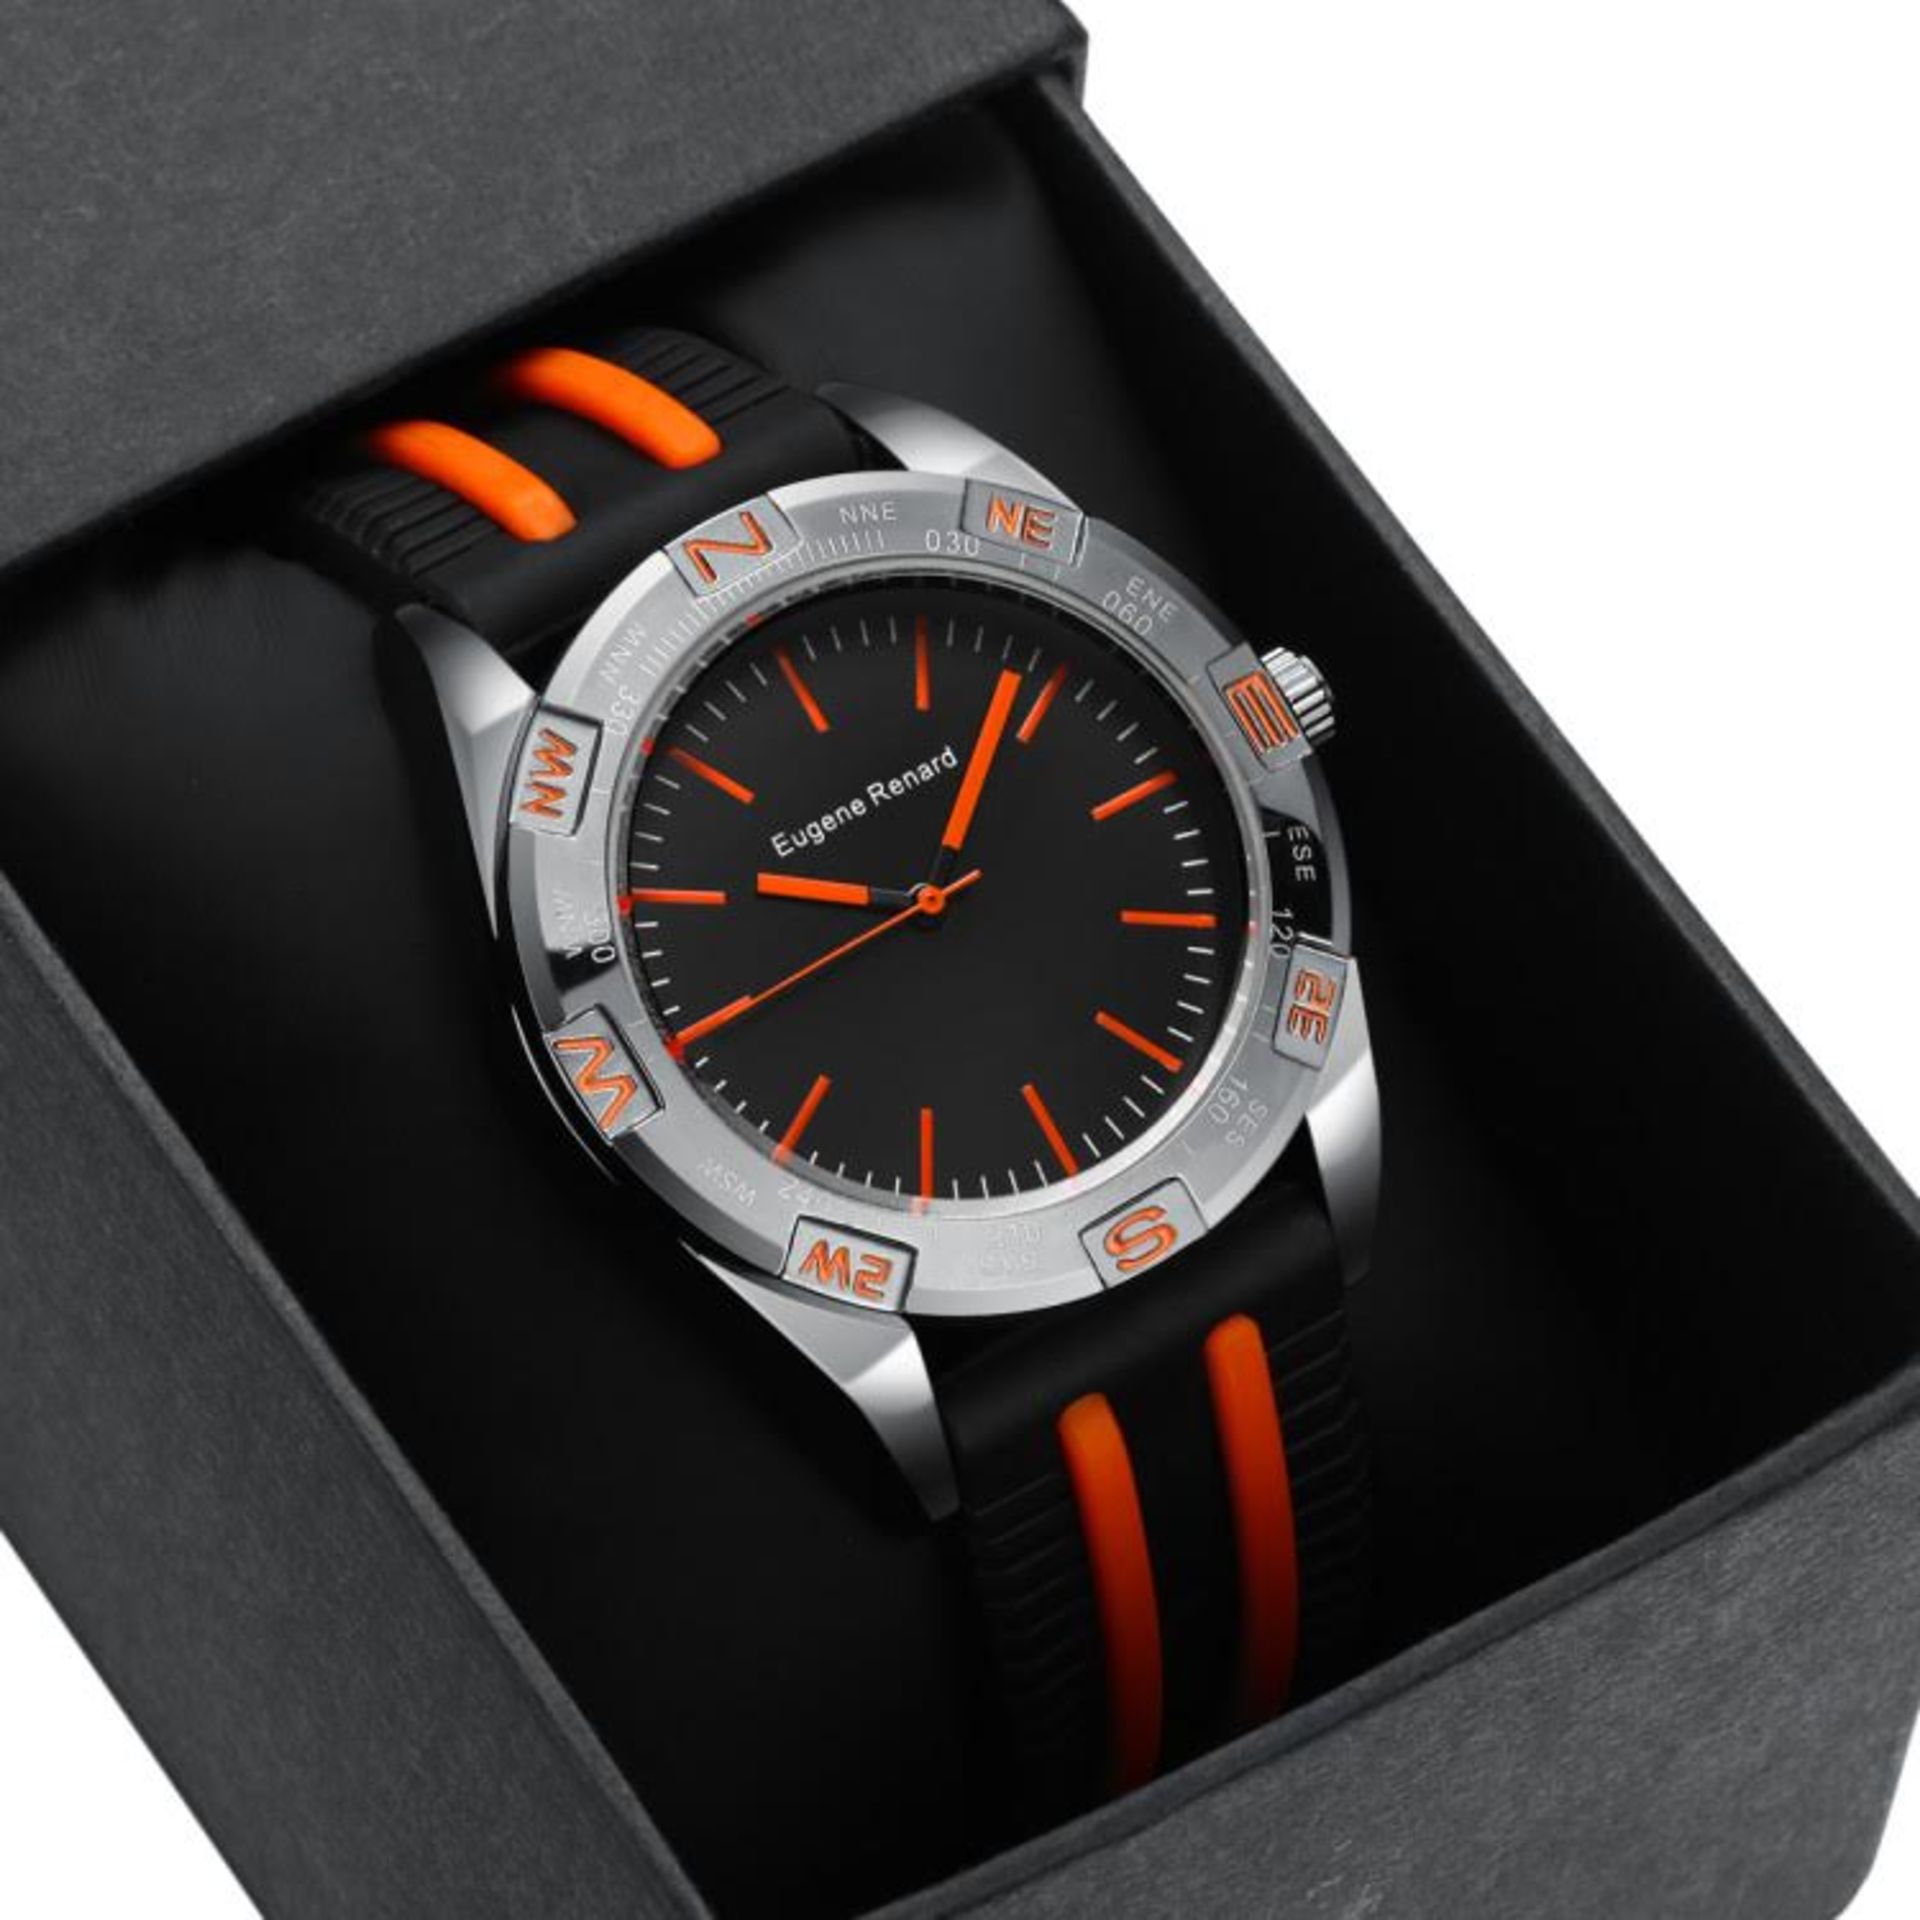 V *TRADE QTY* Brand New Gents Eugene Renard Timepiece Model X - Black Face with Orange Indices -